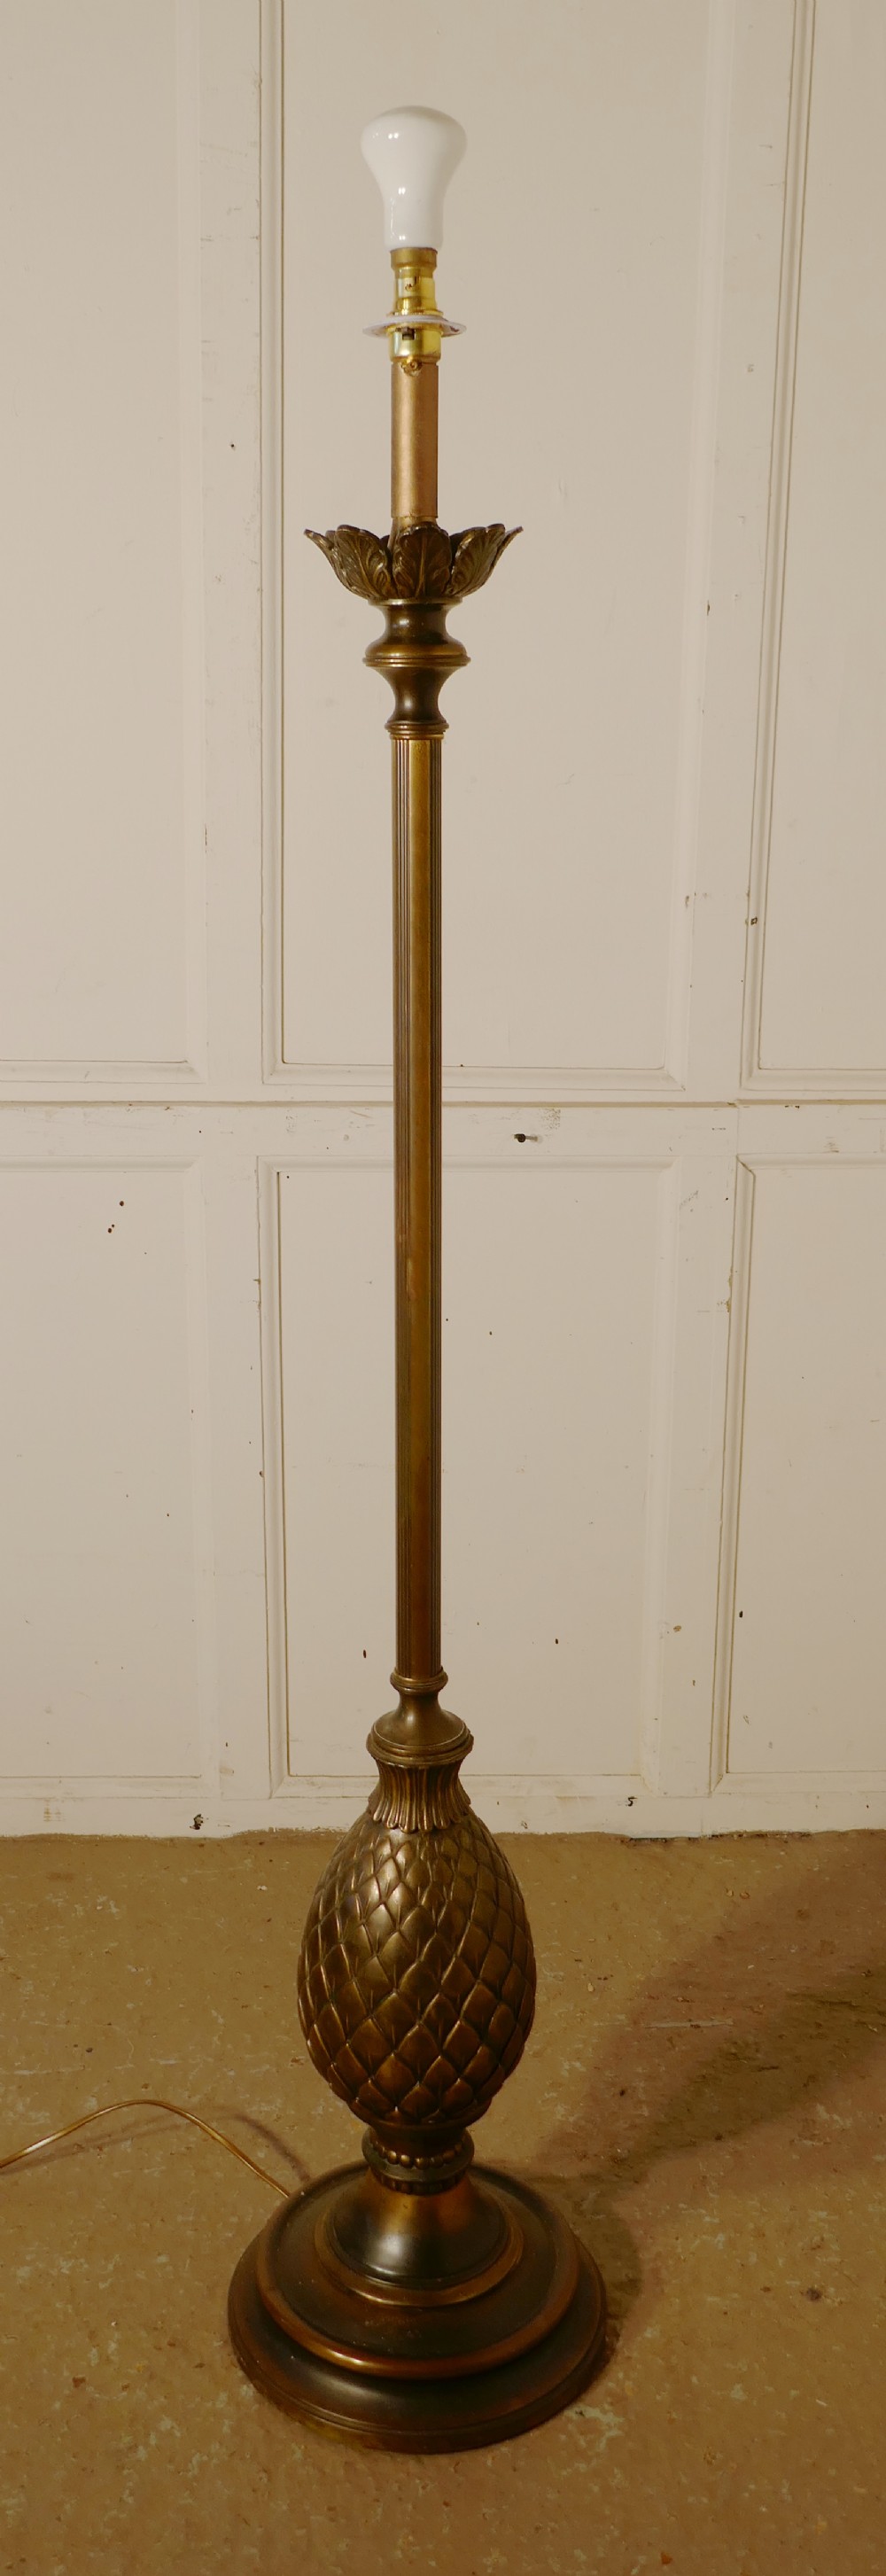 floor lamp brass standard lamp